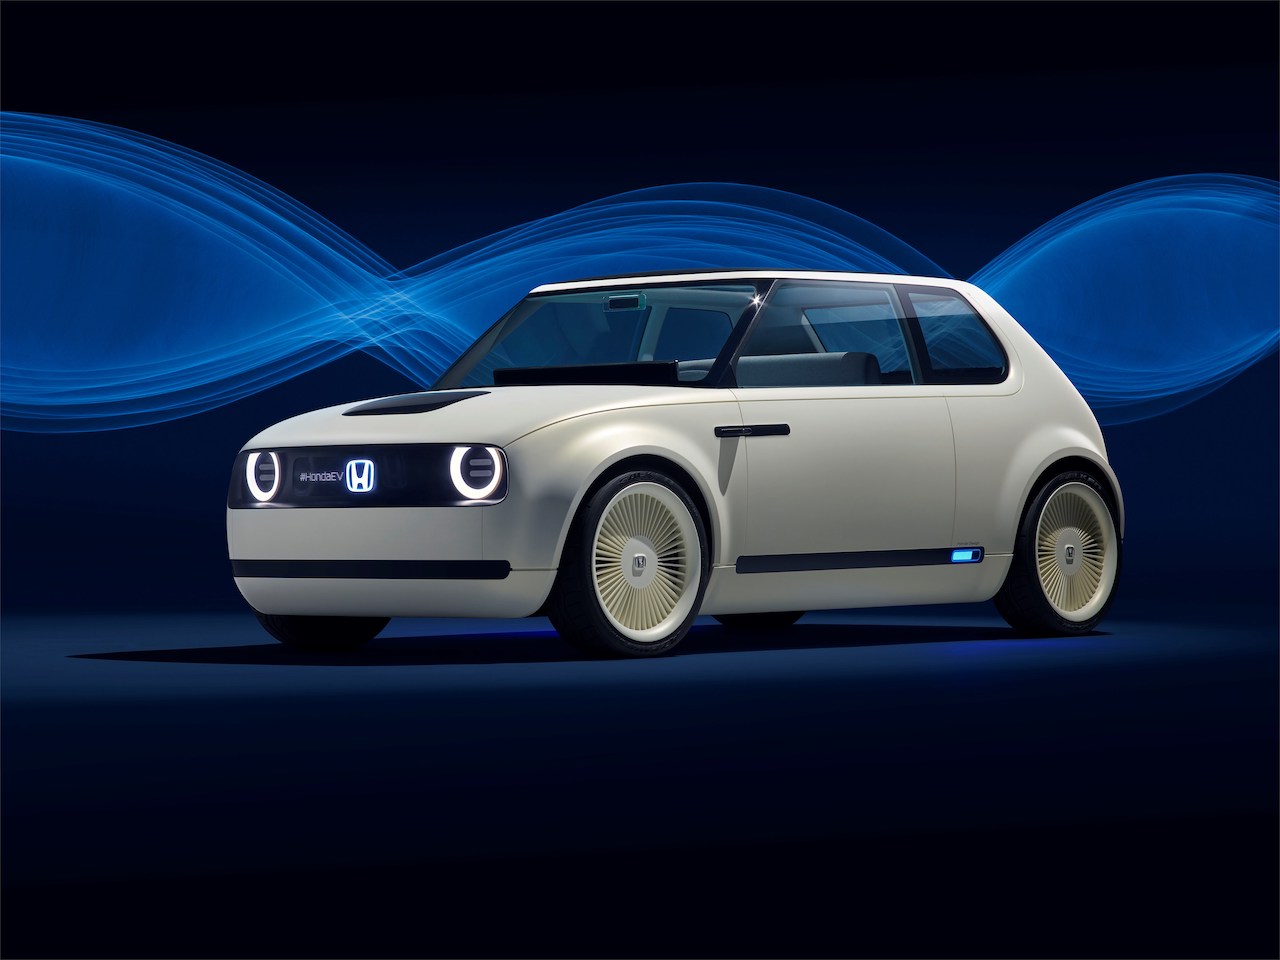 Innovative Car Design of the Future